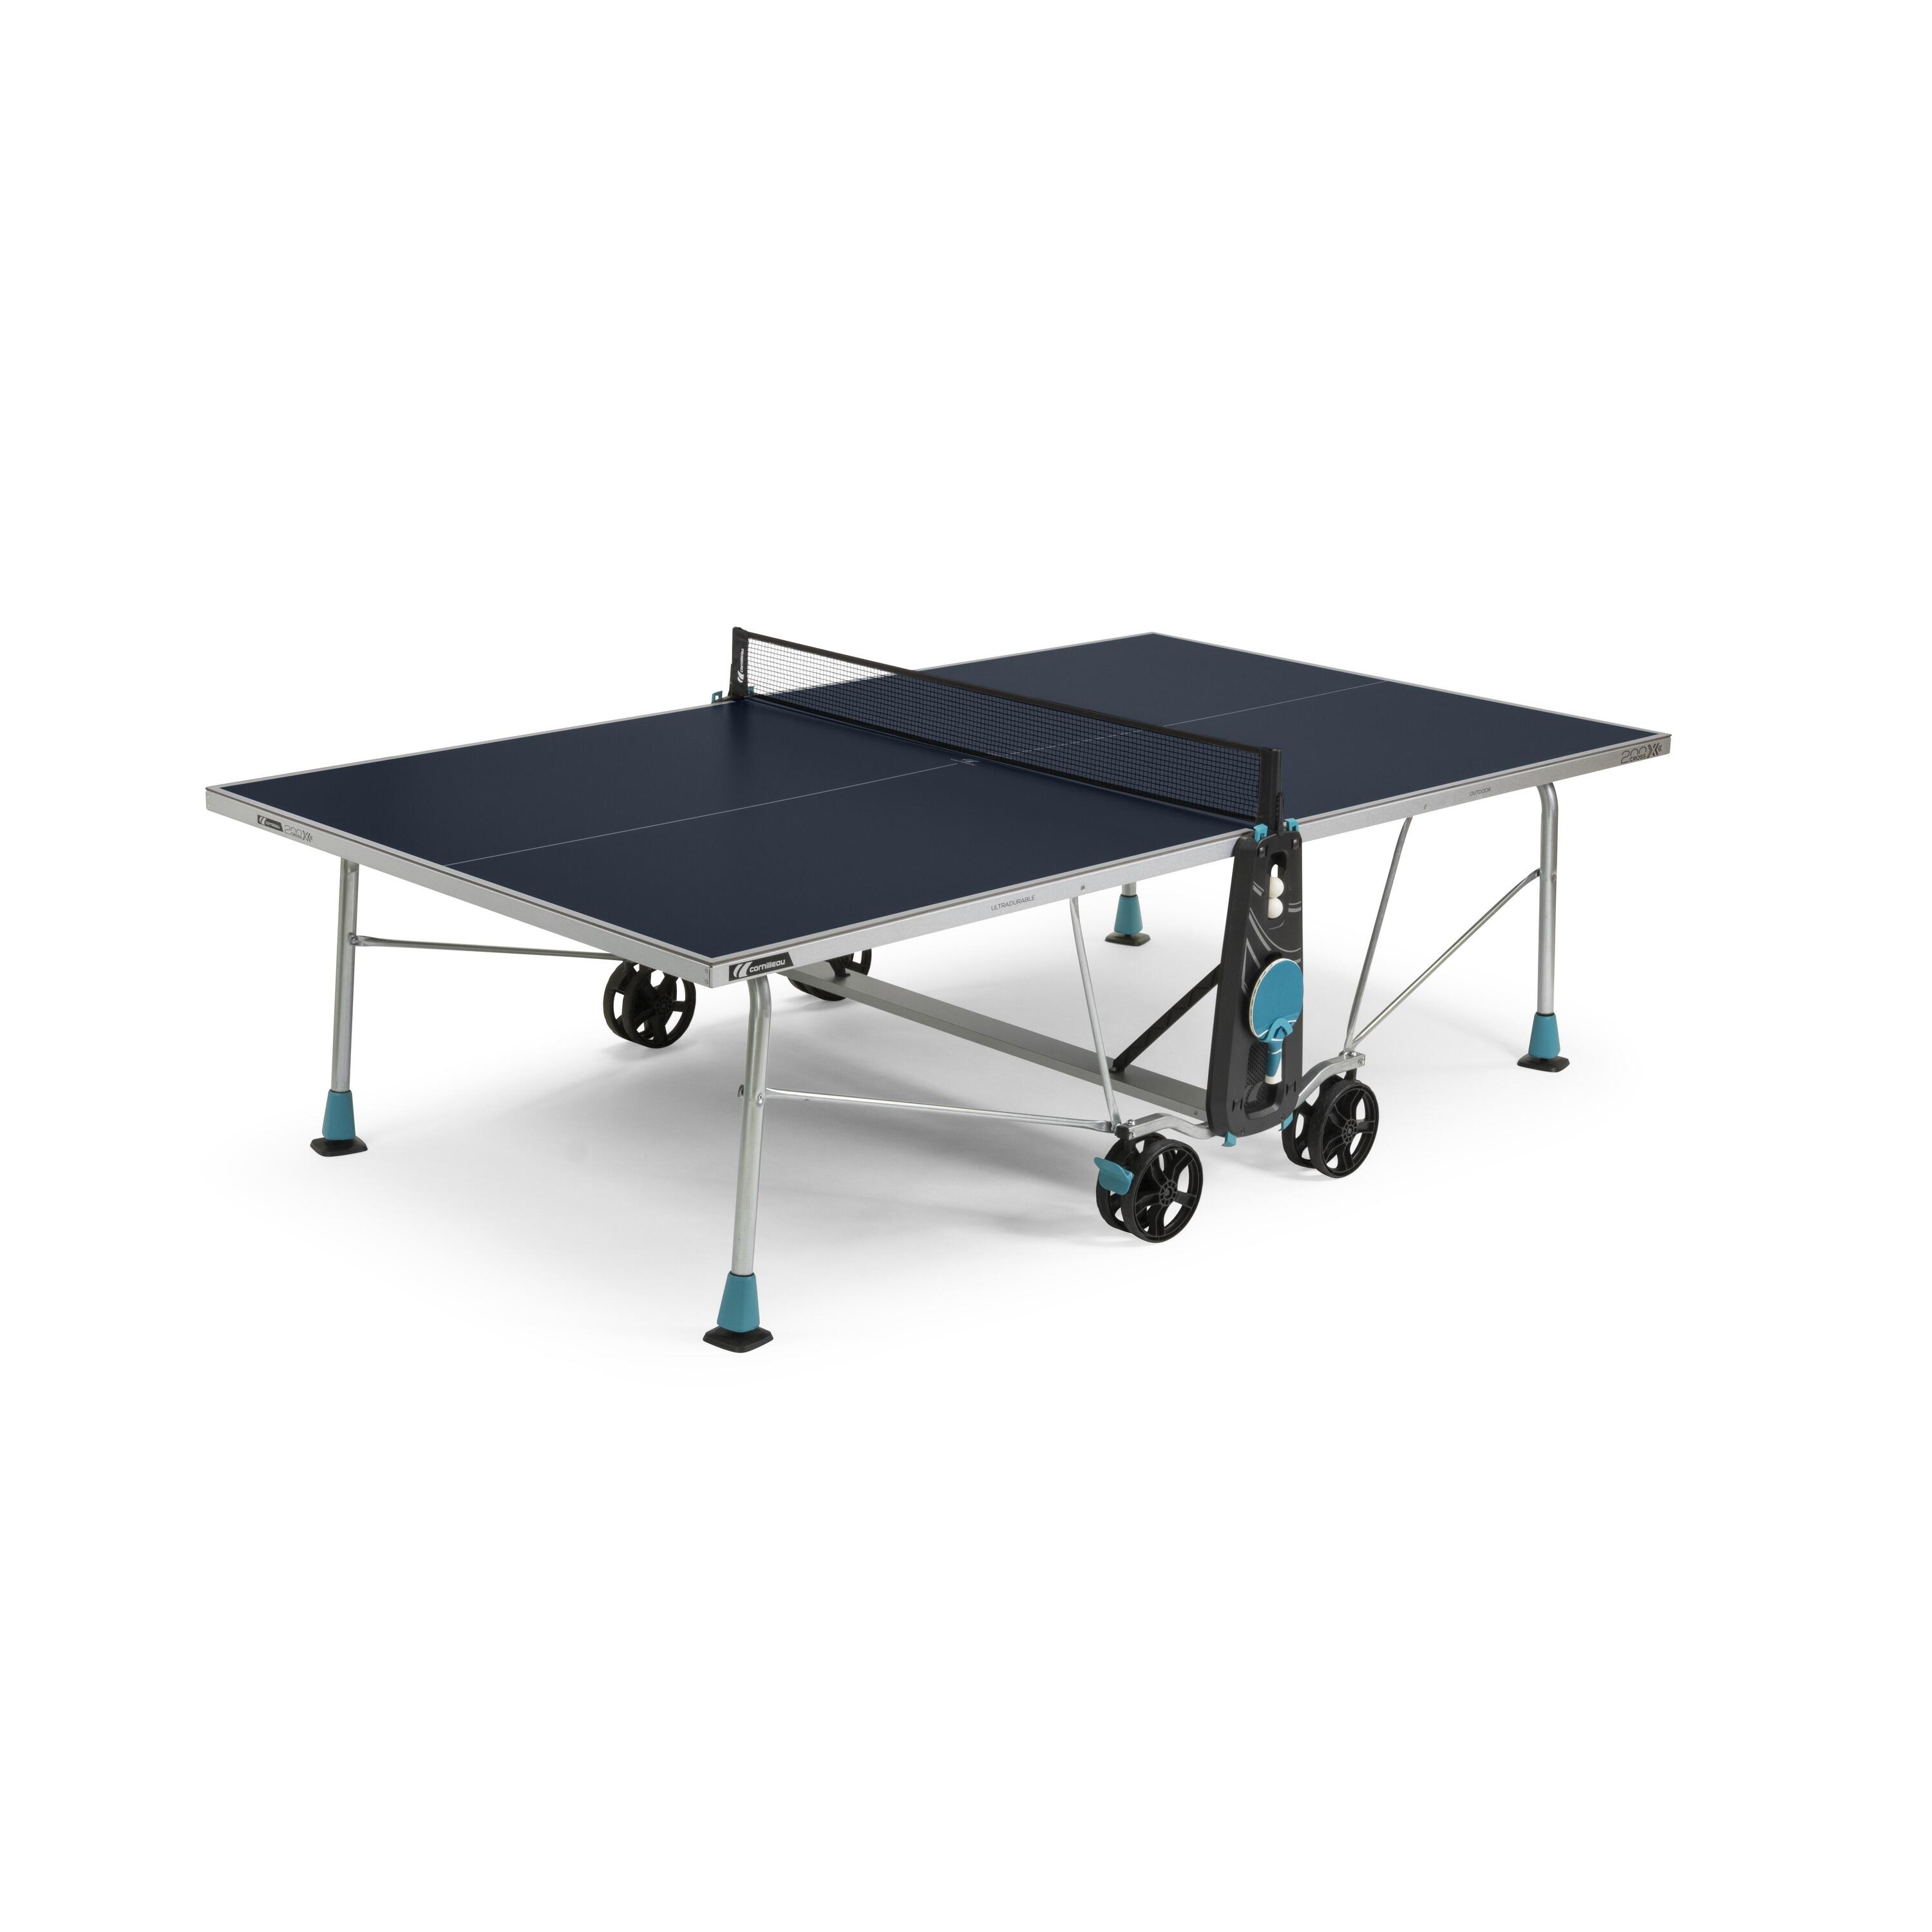 CORNILLEAU 200X Sport Outdoor Table Tennis Table - Blue